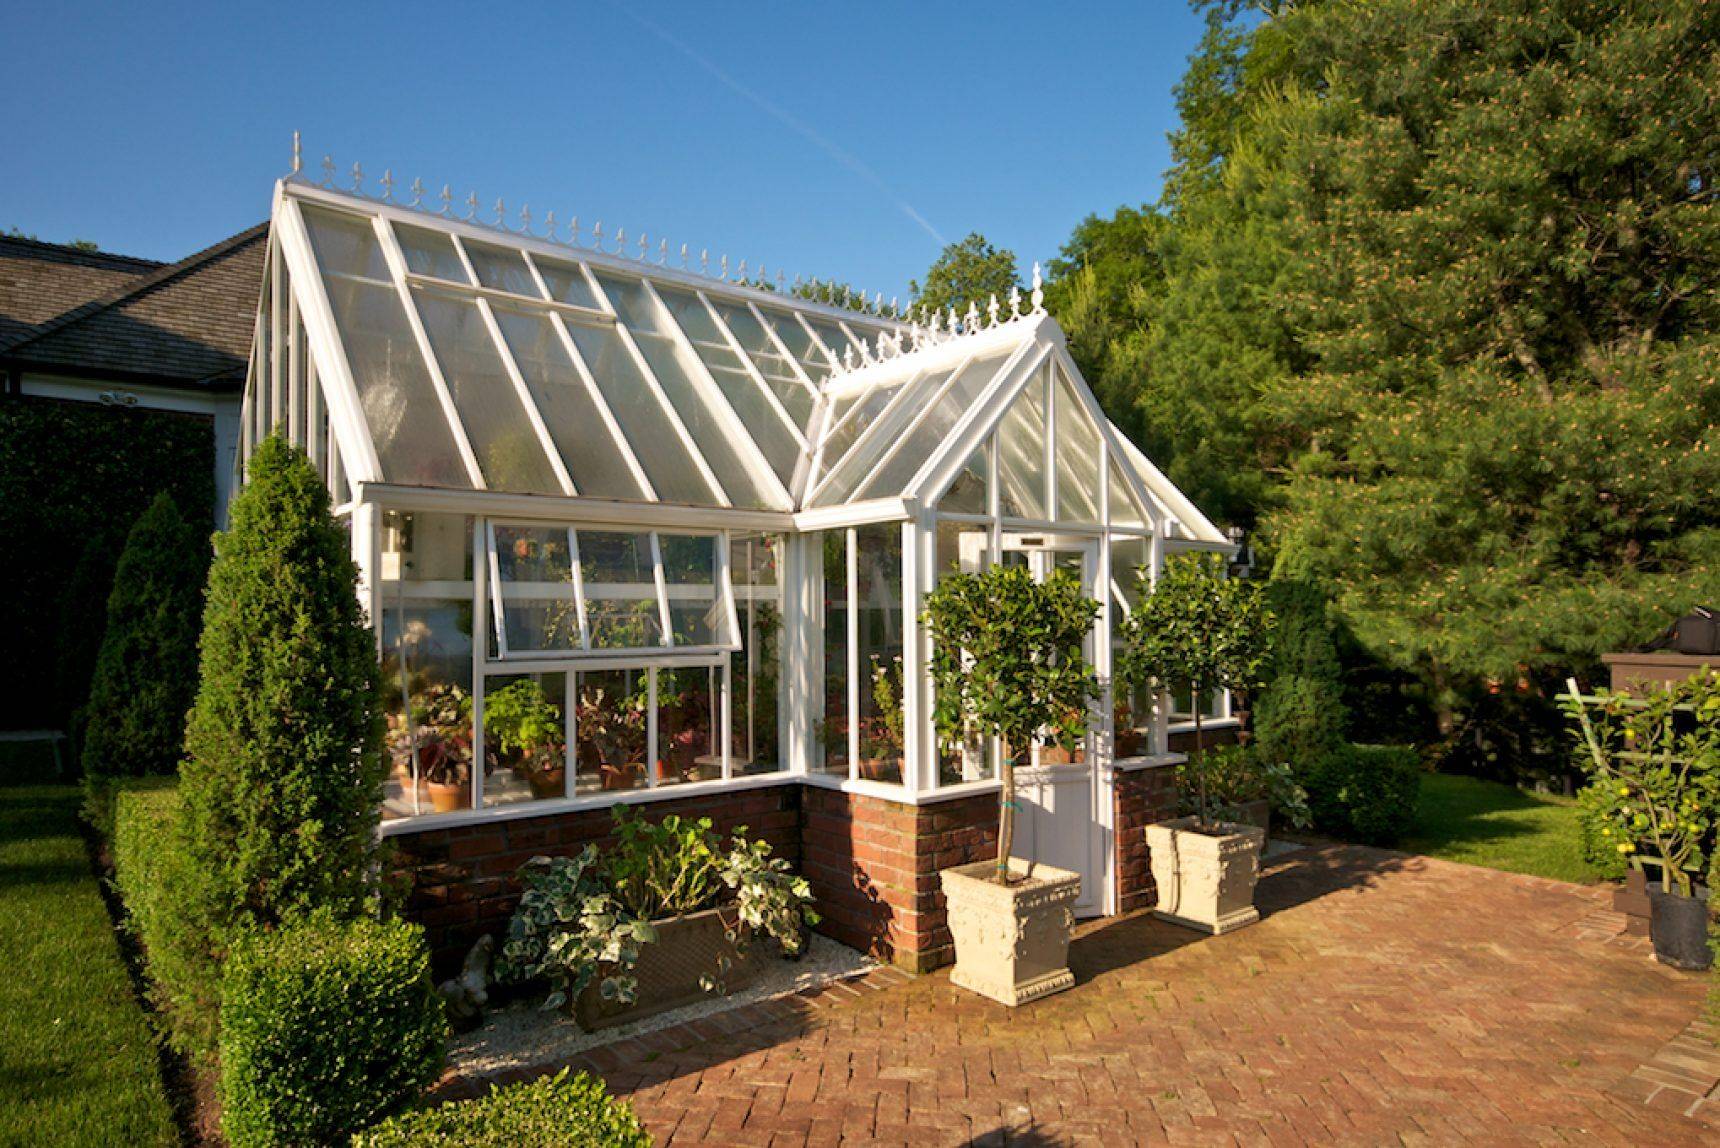 A Highgrow Greenhouse